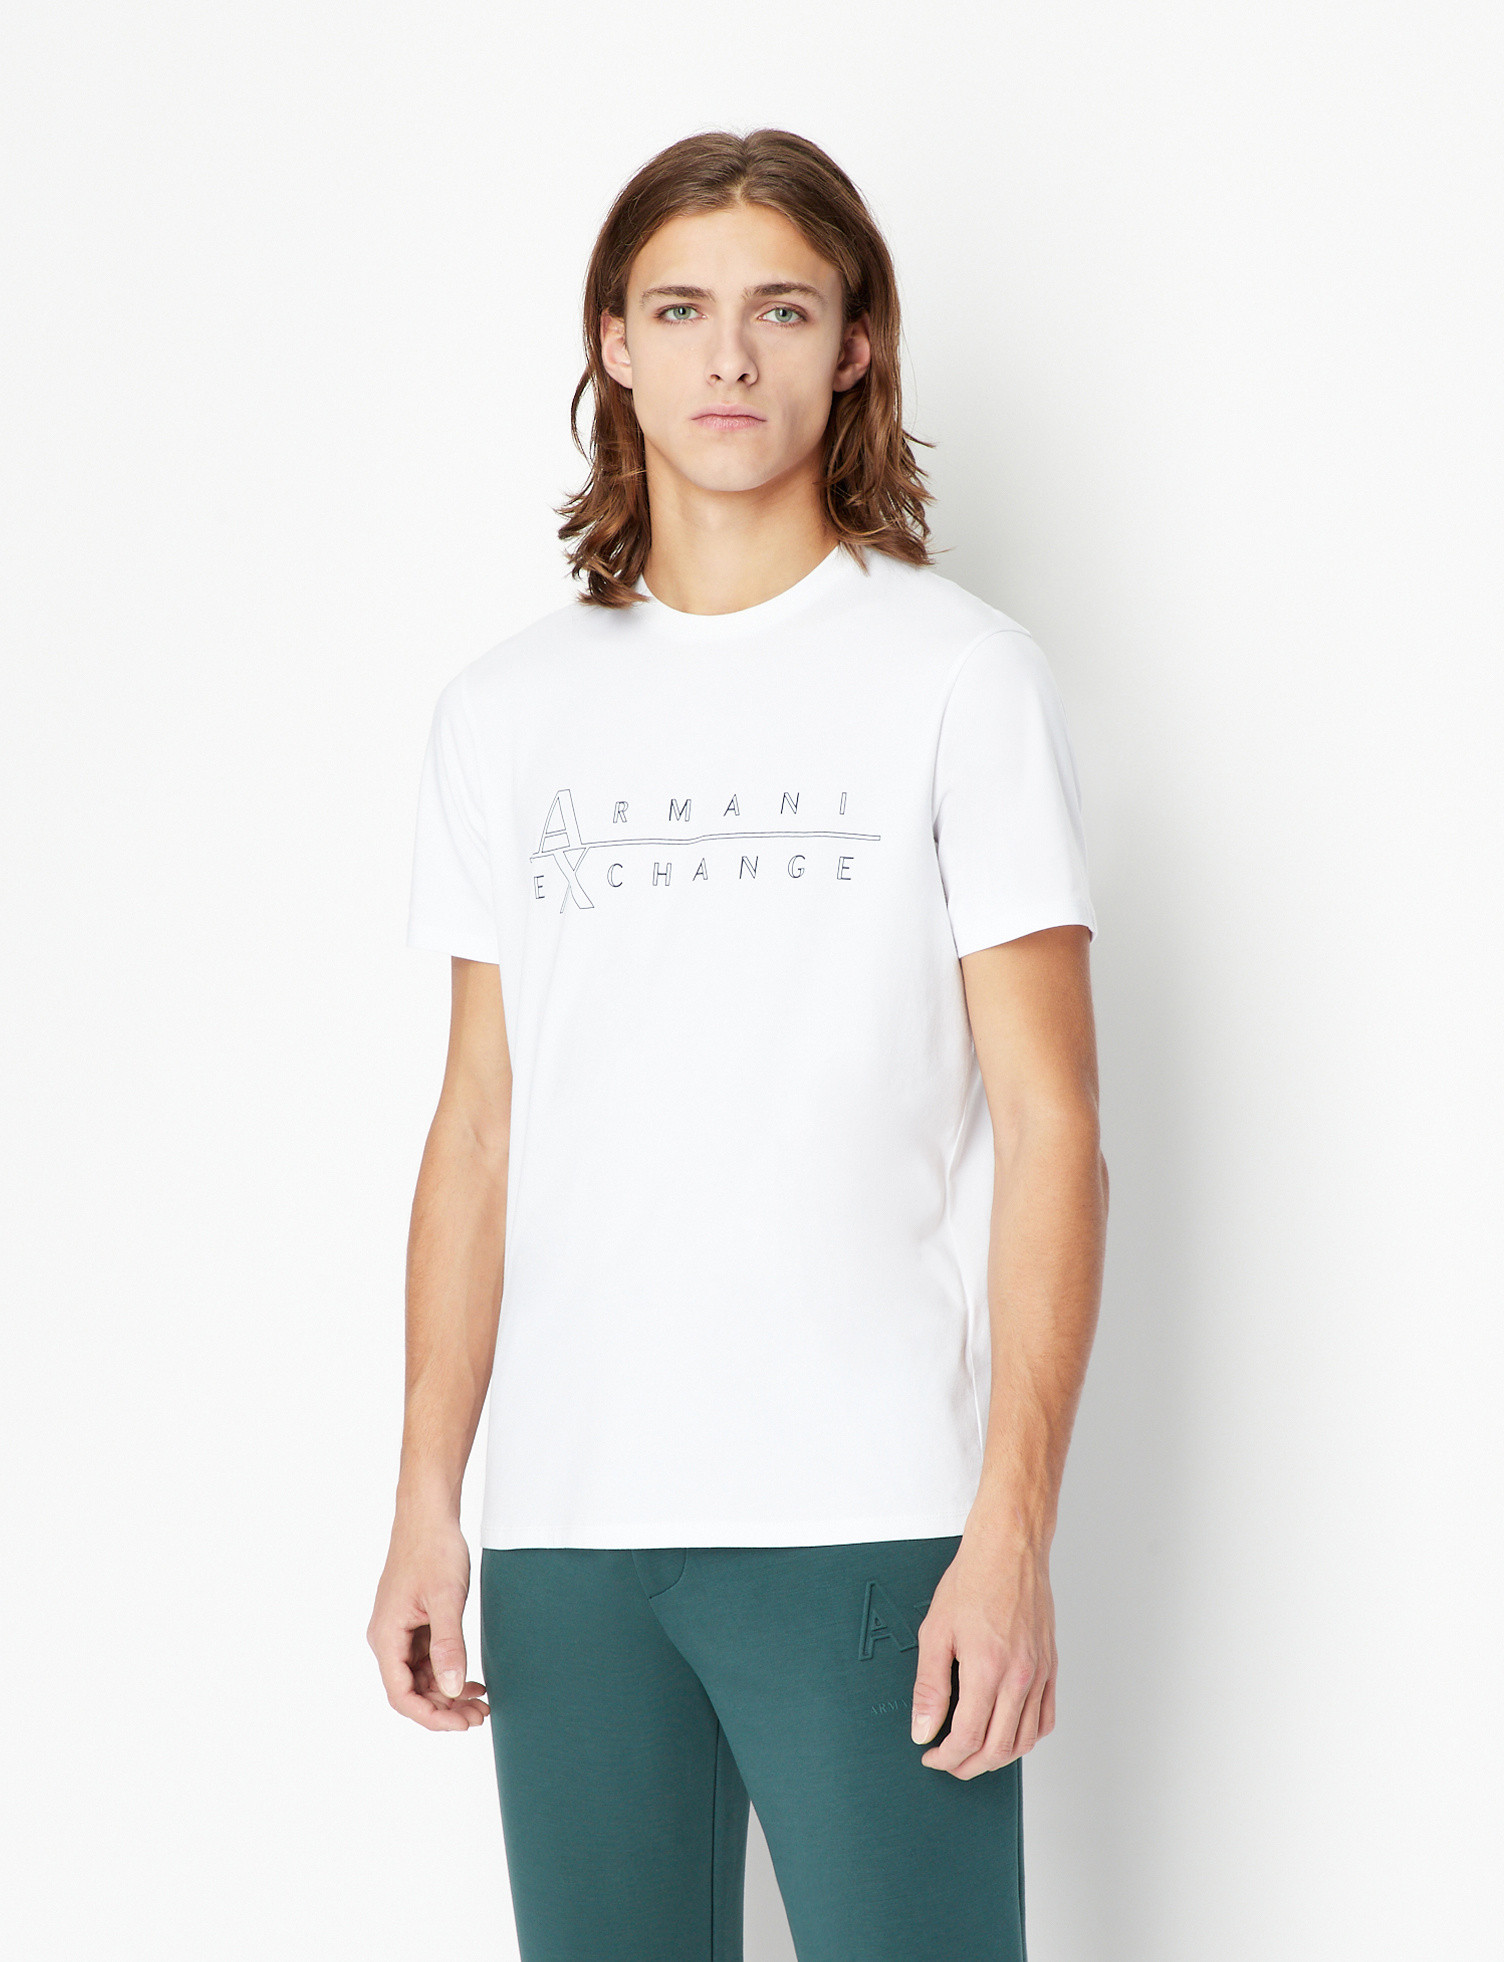 Armani Exchange - T-shirt con stampa slim fit, Bianco, large image number 1